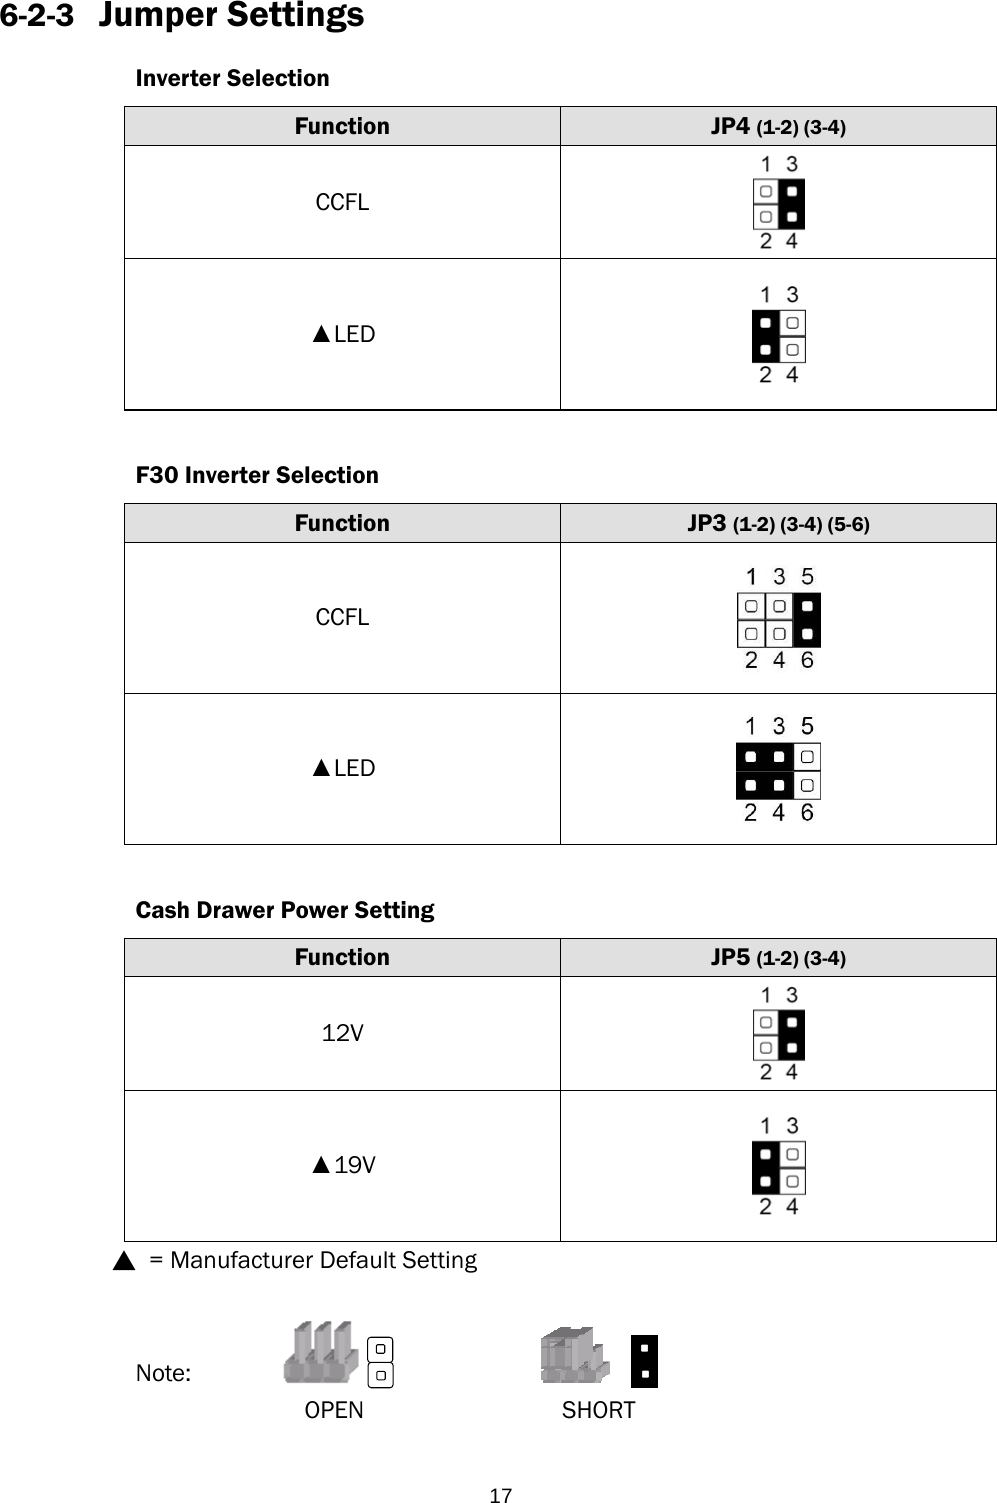  176-2-3 Jumper Settings Inverter Selection   Function  JP4 (1-2) (3-4) CCFL  ▲LED   F30 Inverter Selection   Function  JP3 (1-2) (3-4) (5-6) CCFL  ▲LED   Cash Drawer Power Setting   Function  JP5 (1-2) (3-4) 12V  ▲19V  ▲ = Manufacturer Default Setting        Note:    OPEN  SHORT 